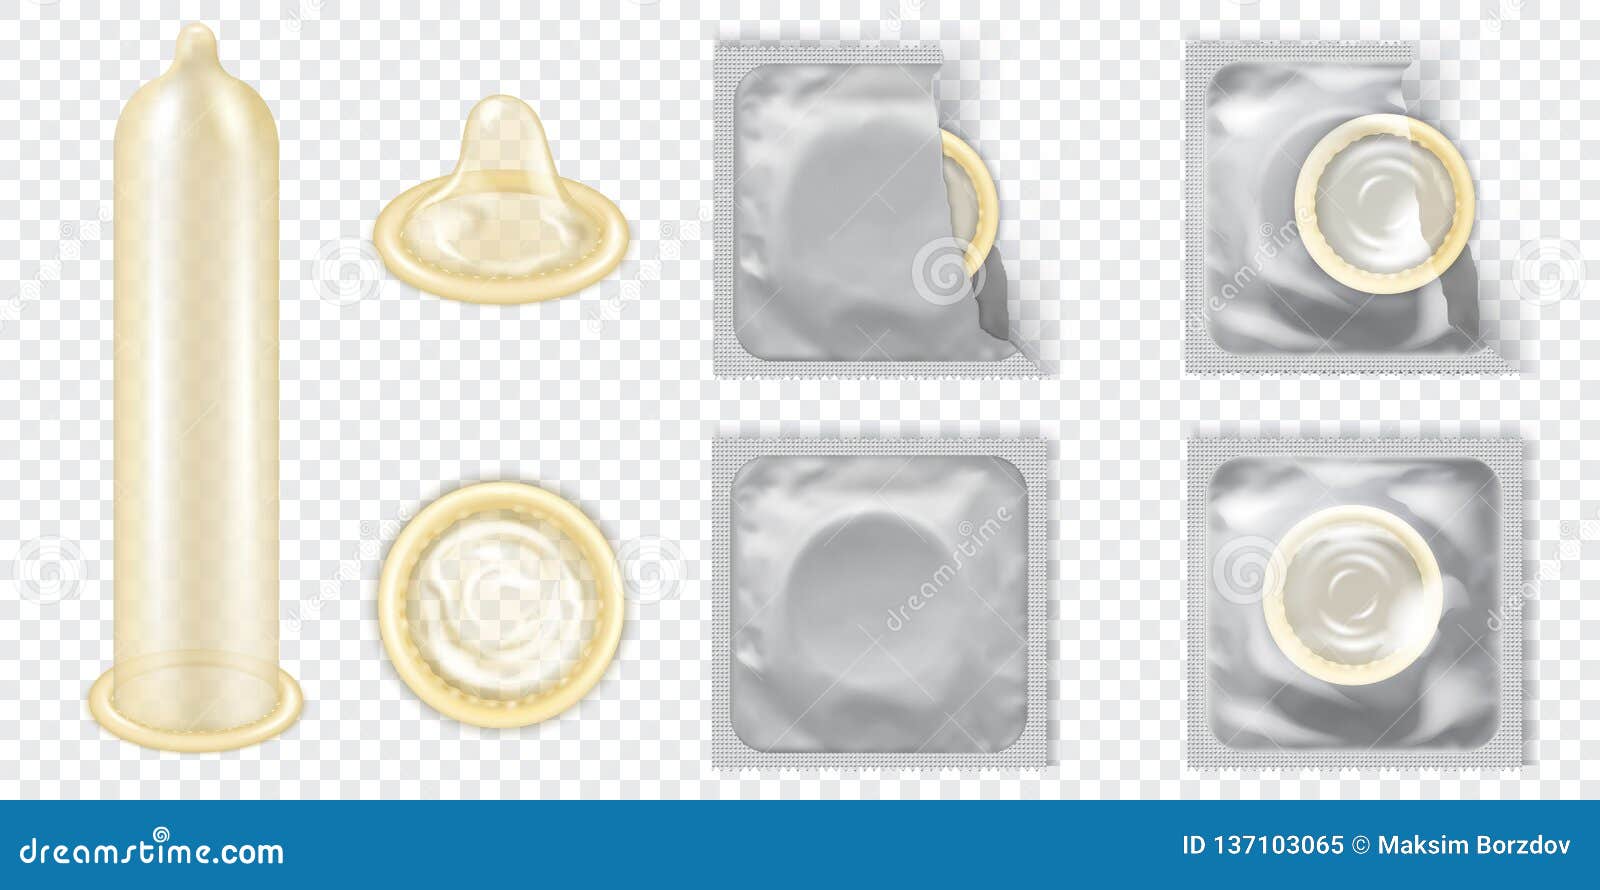 Download Realistic 3D Detailed Latex Condom Vector Set. Stock ...